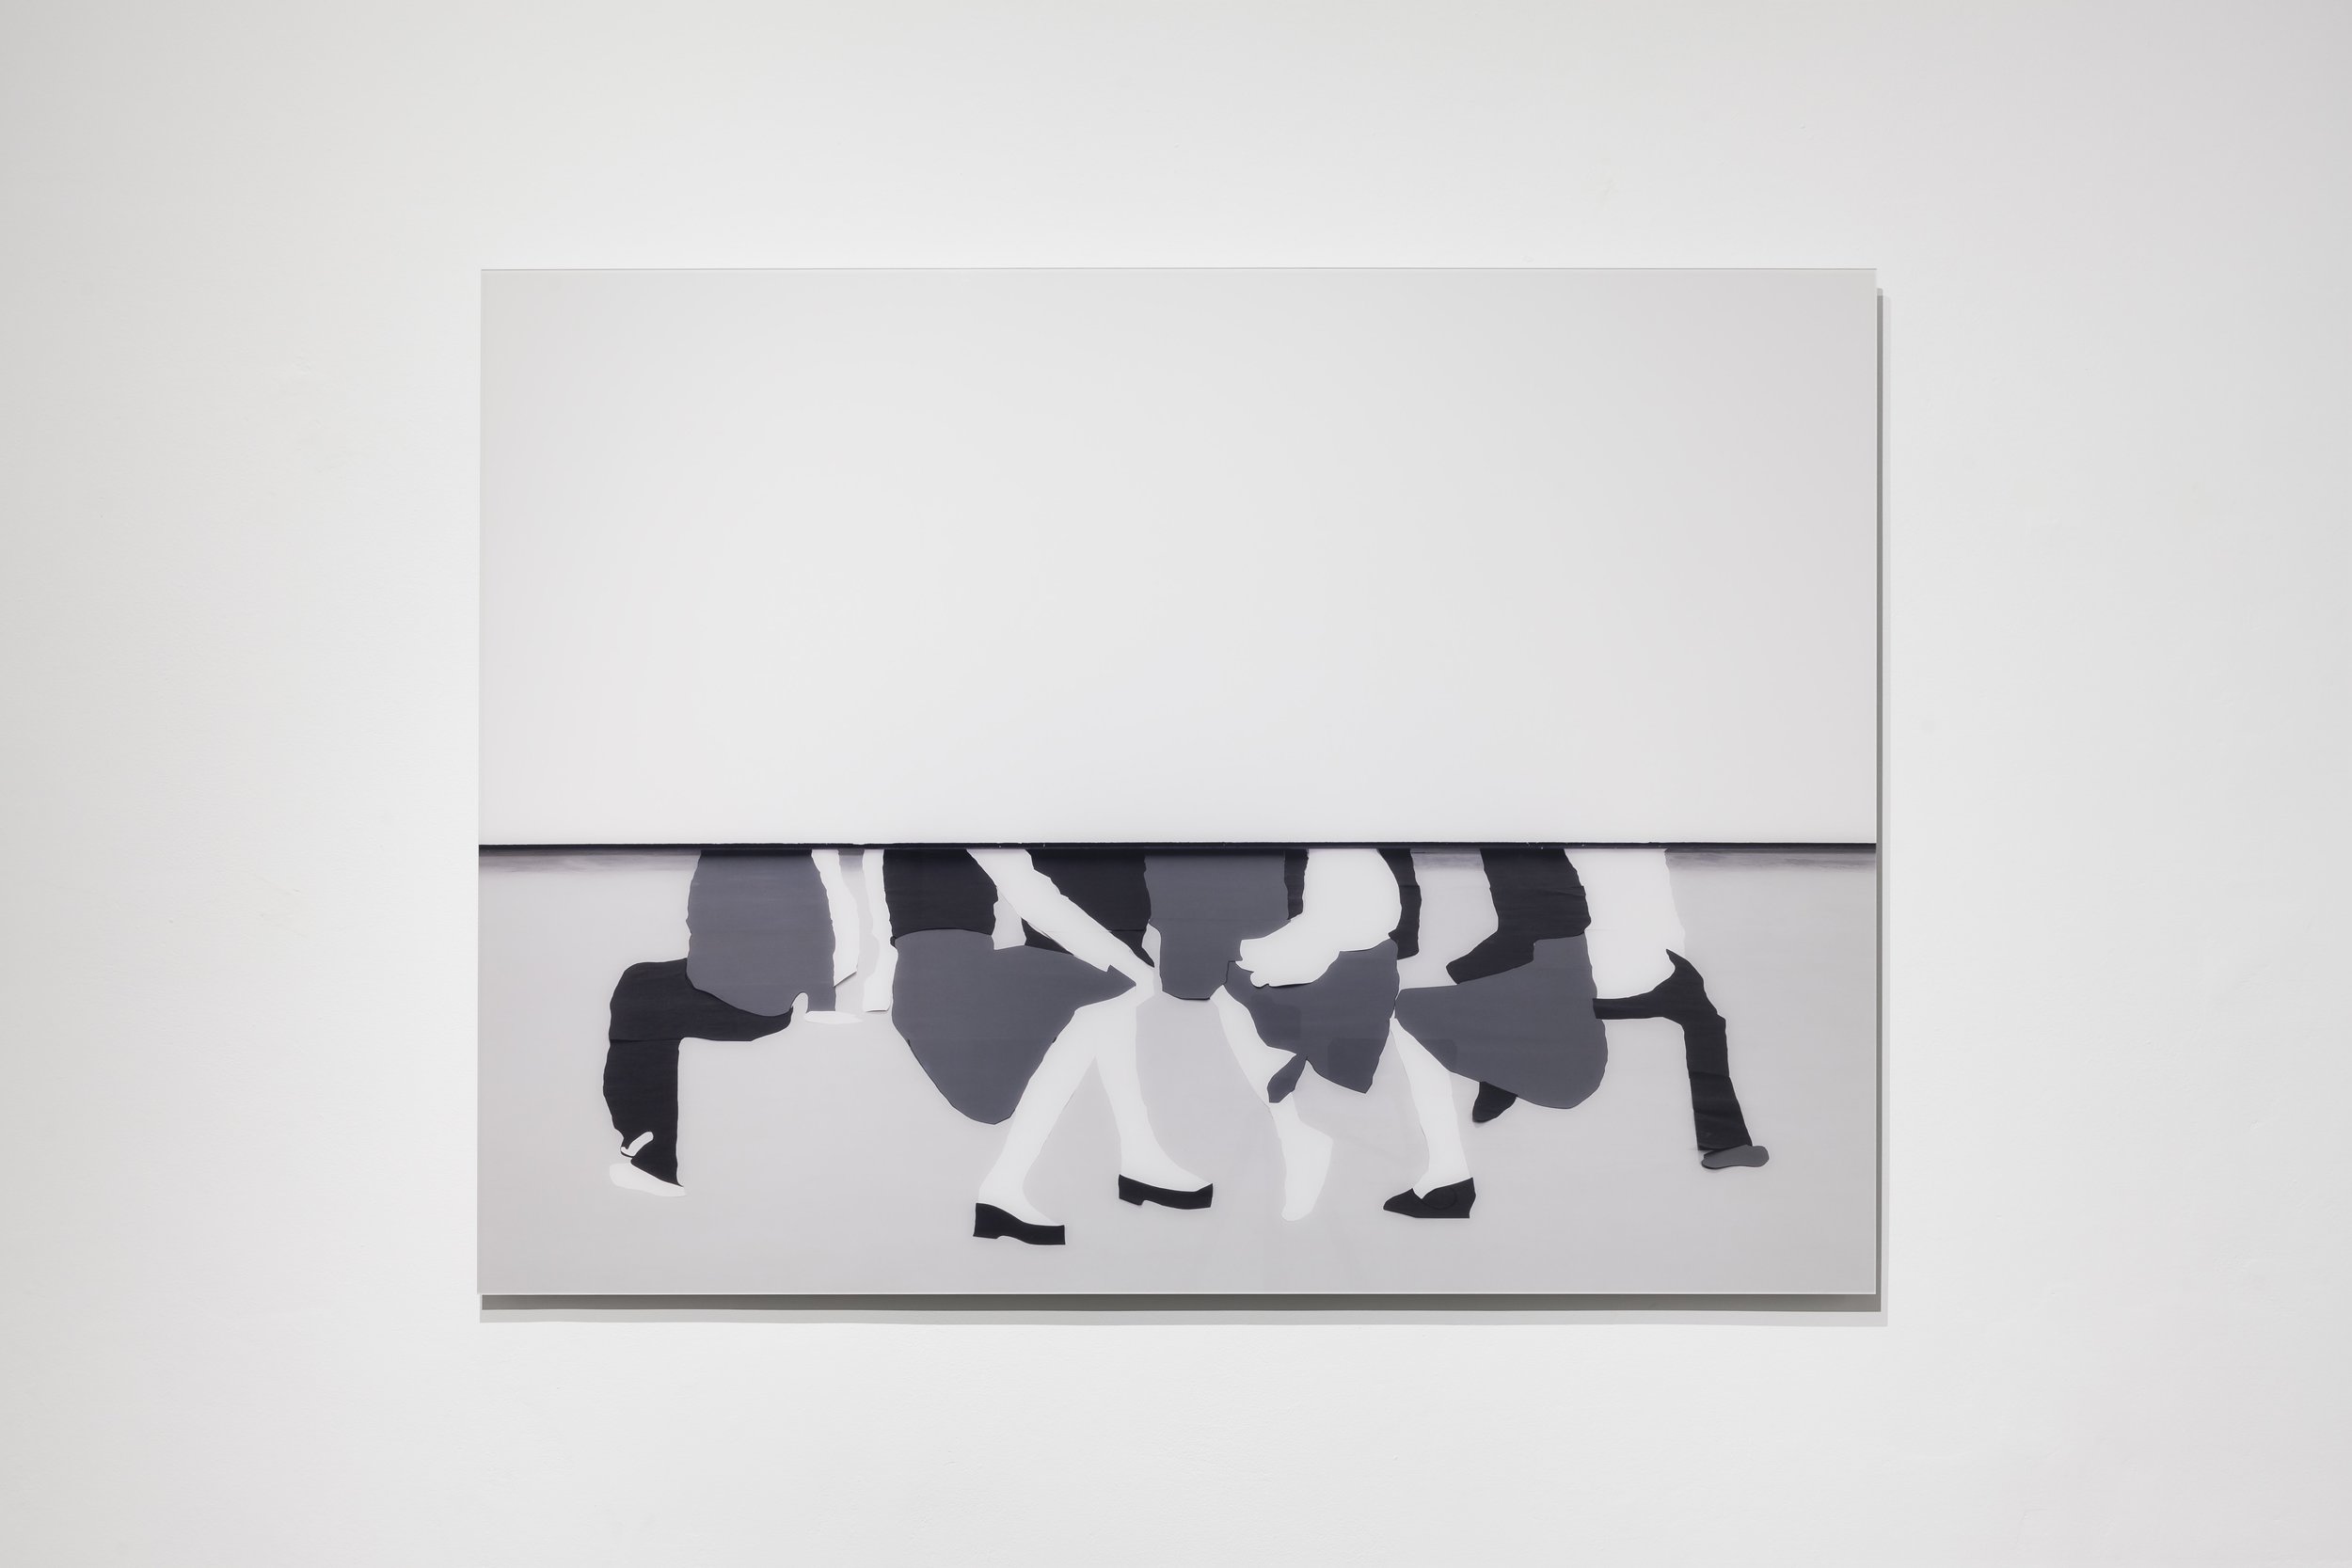  Igor Eškinja,  Laboratory , 2010, lambda print on plexiglass, 120 x 160 cm 